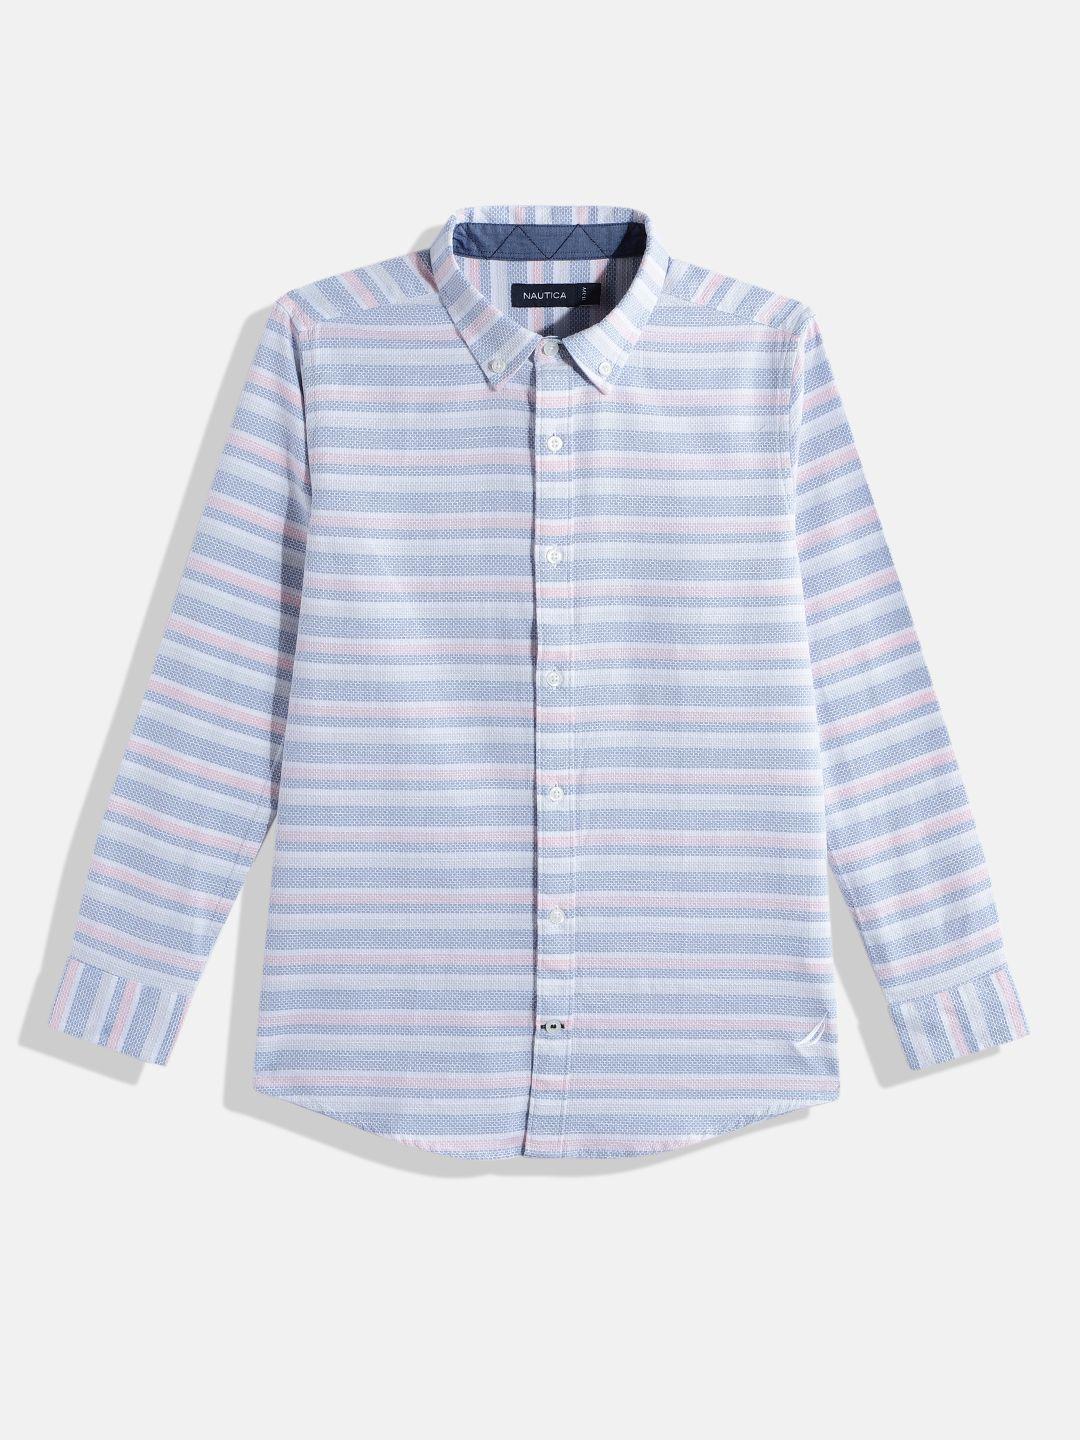 nautica boys multi or variegated stripes & self design opaque pure cotton casual shirt